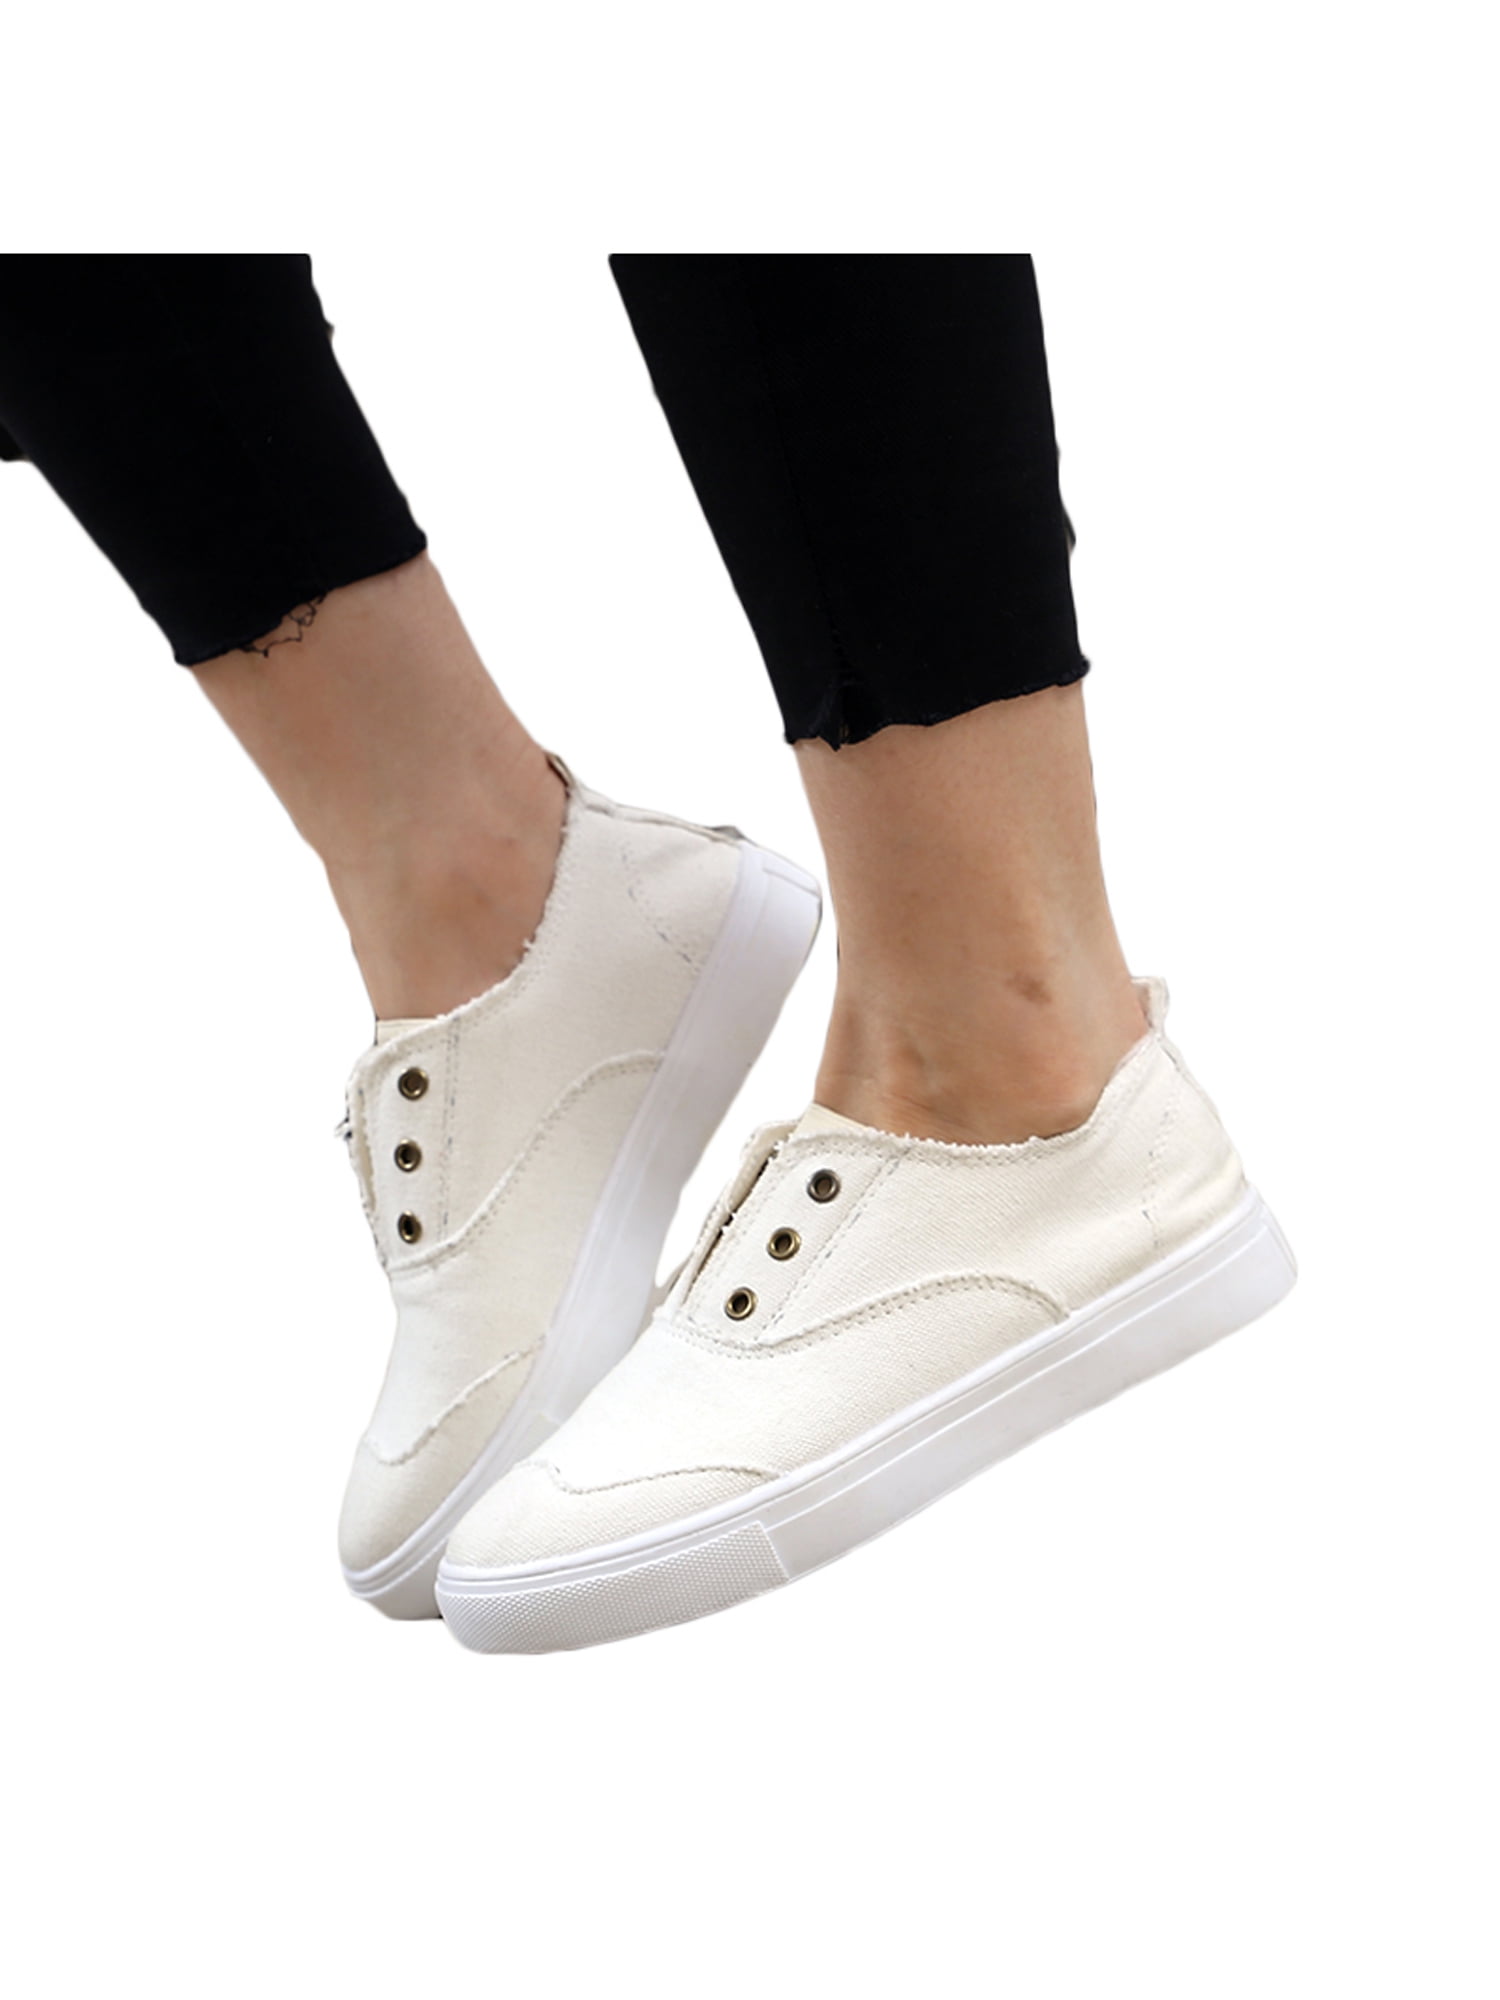 walmart plain white shoes